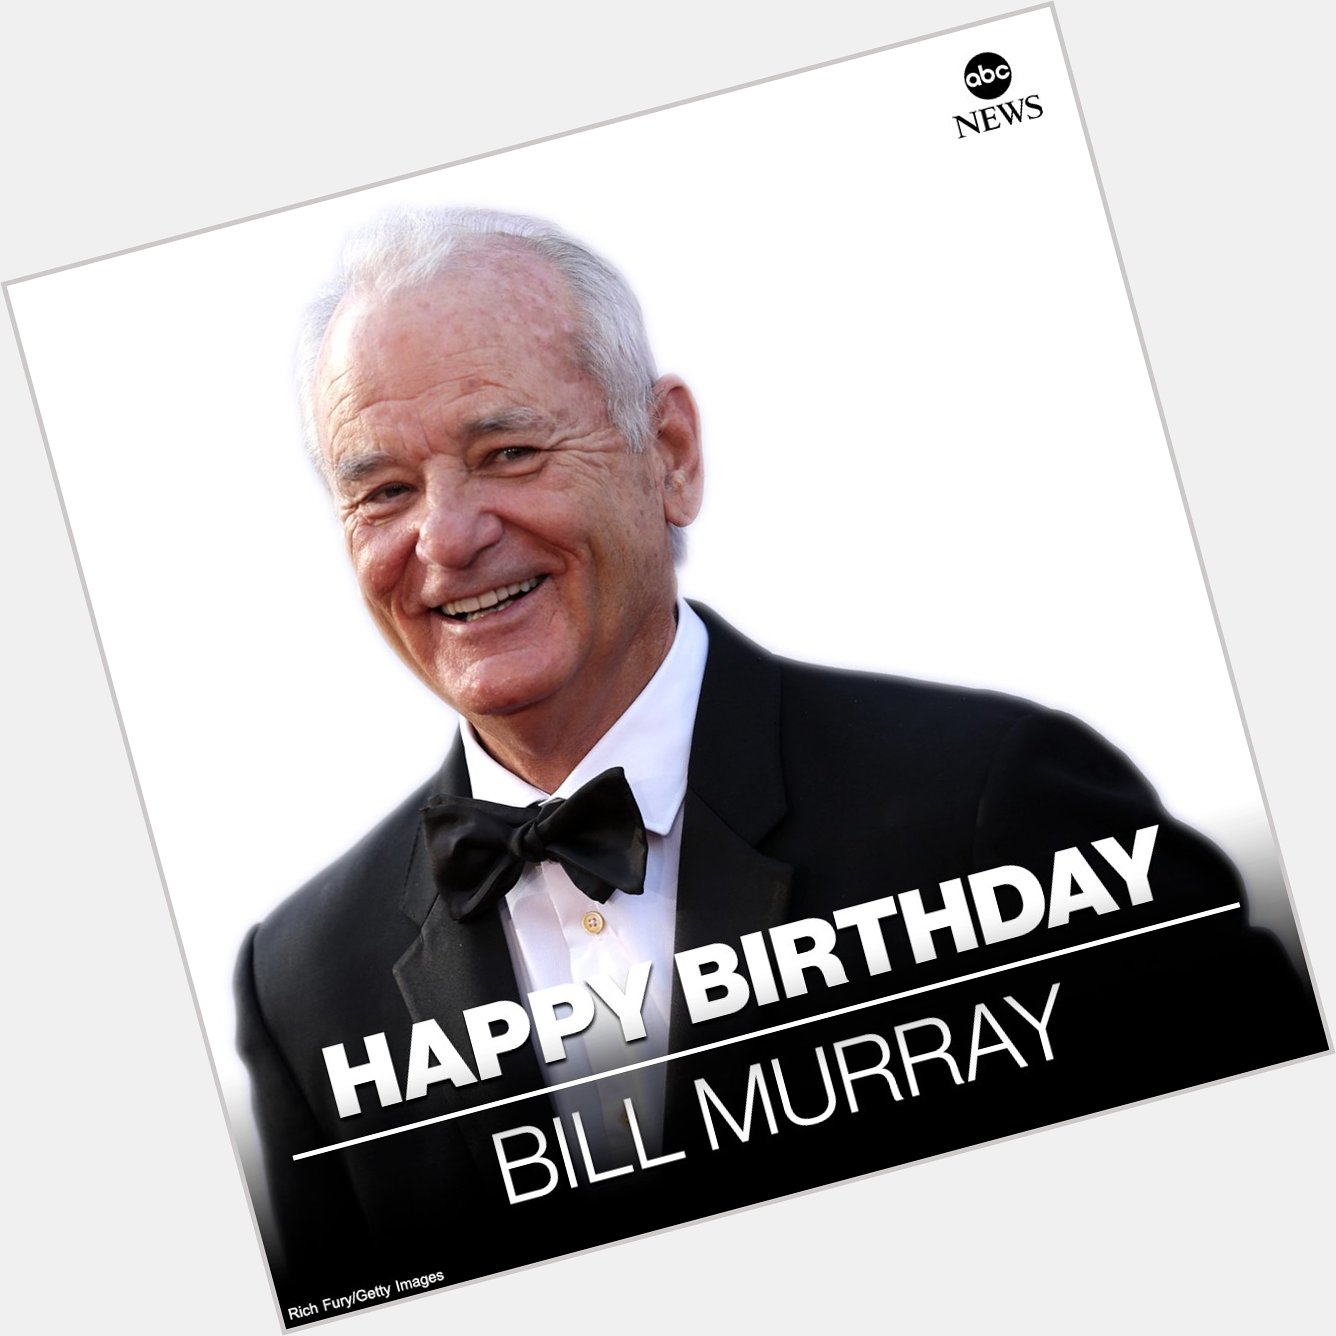 HAPPY BIRTHDAY: Actor-comedian Bill Murray is 71 today.  